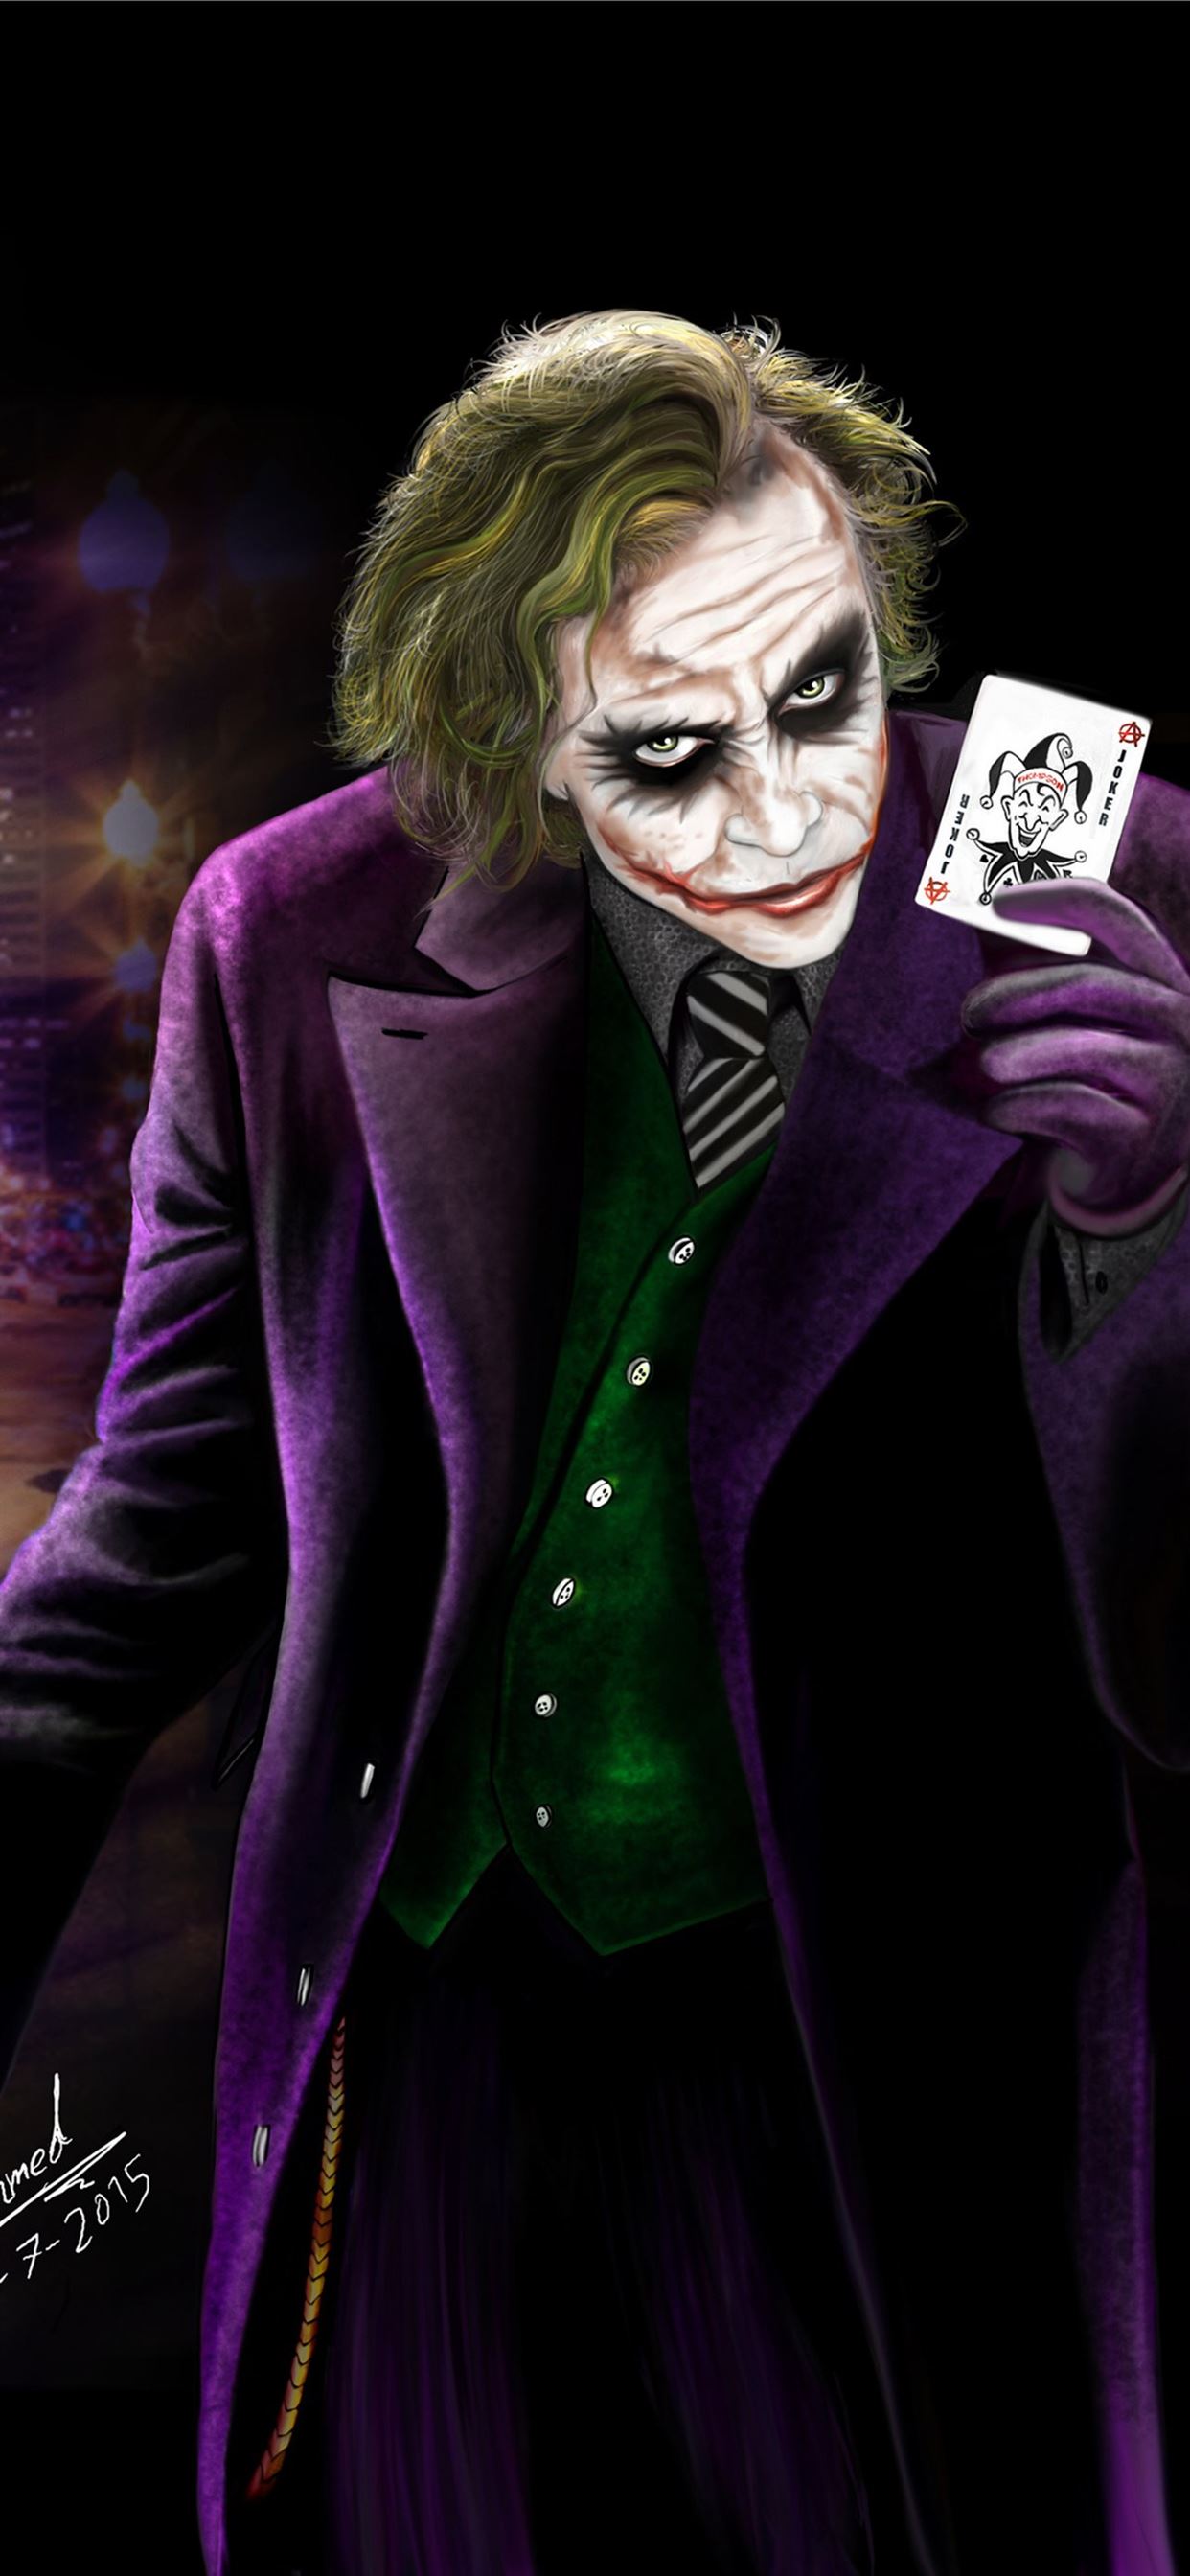 Joker Hd Wallpapers For Iphone 6  4k Ultra Hd Joker  1080x1920 Wallpaper   teahubio